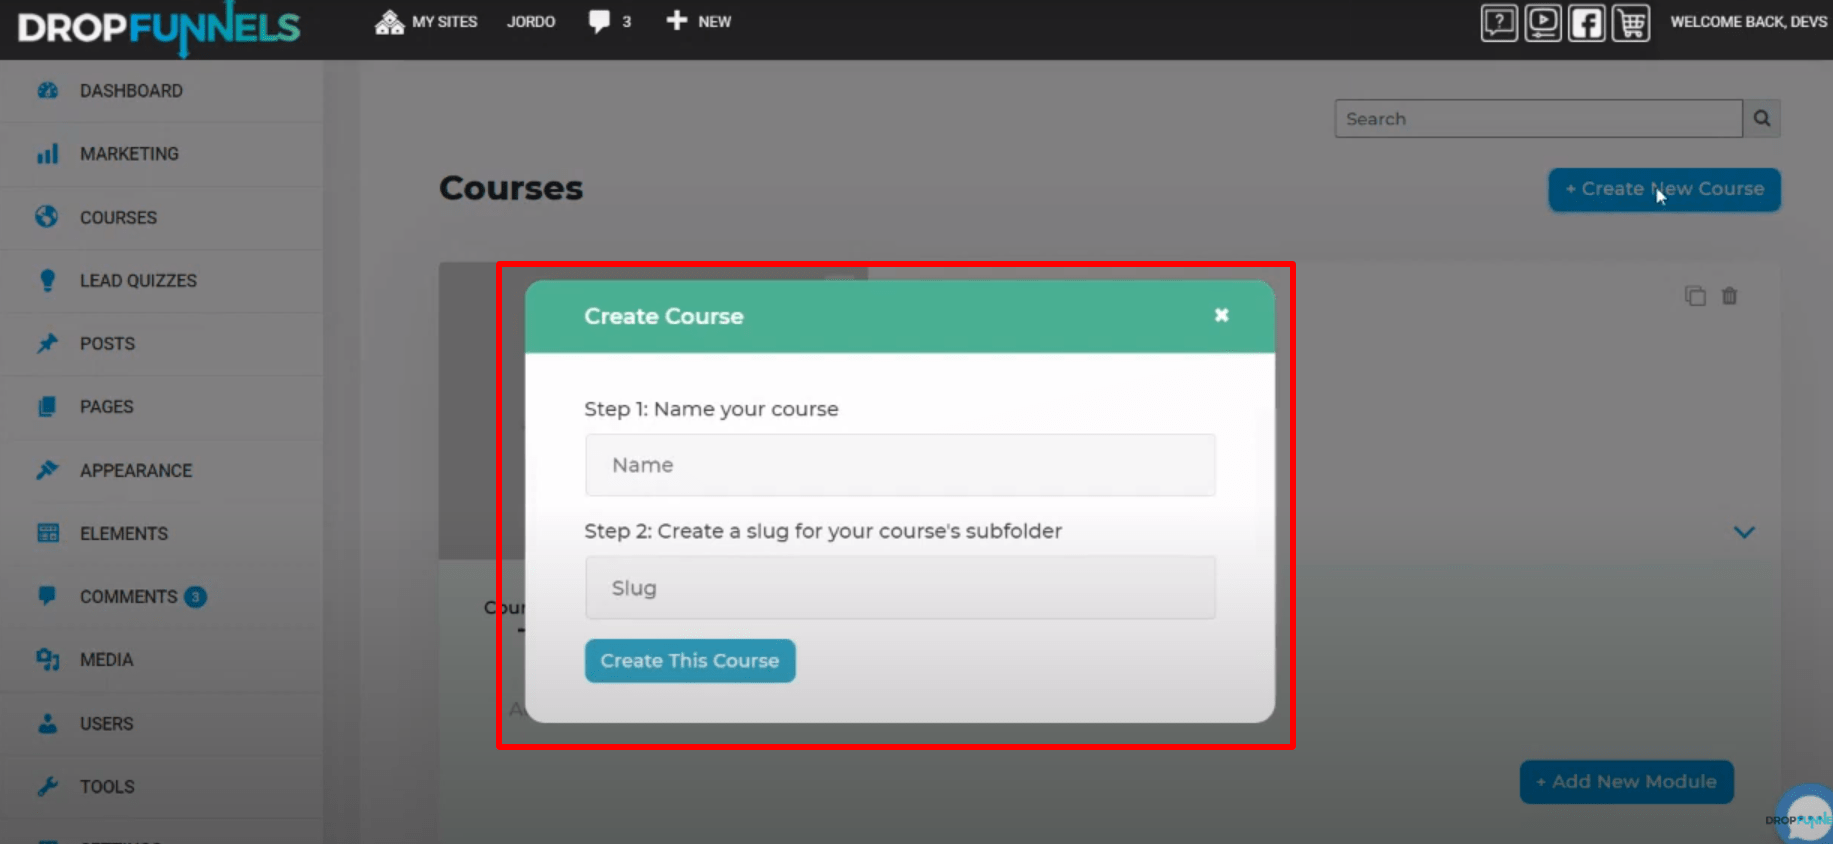 DropFunnels course creation